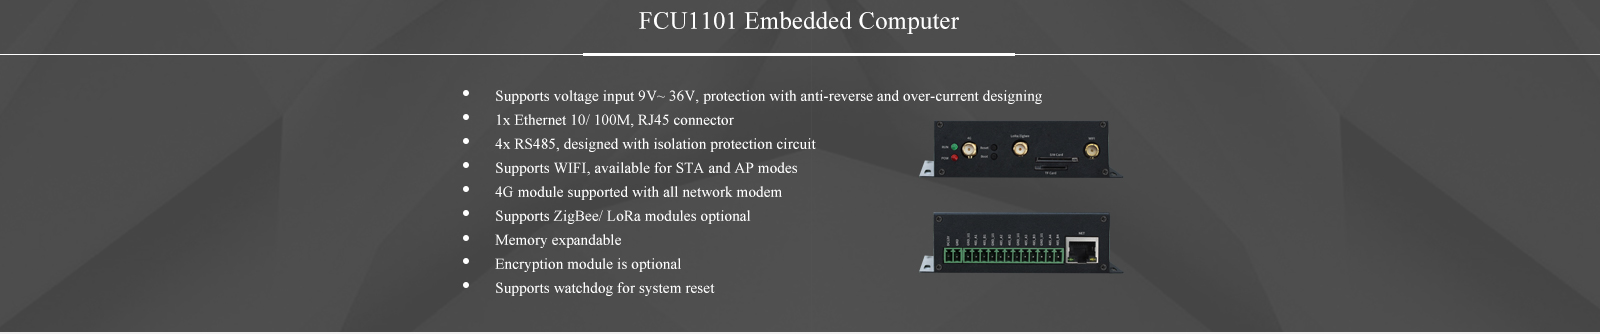 FCU1101 embedded computer